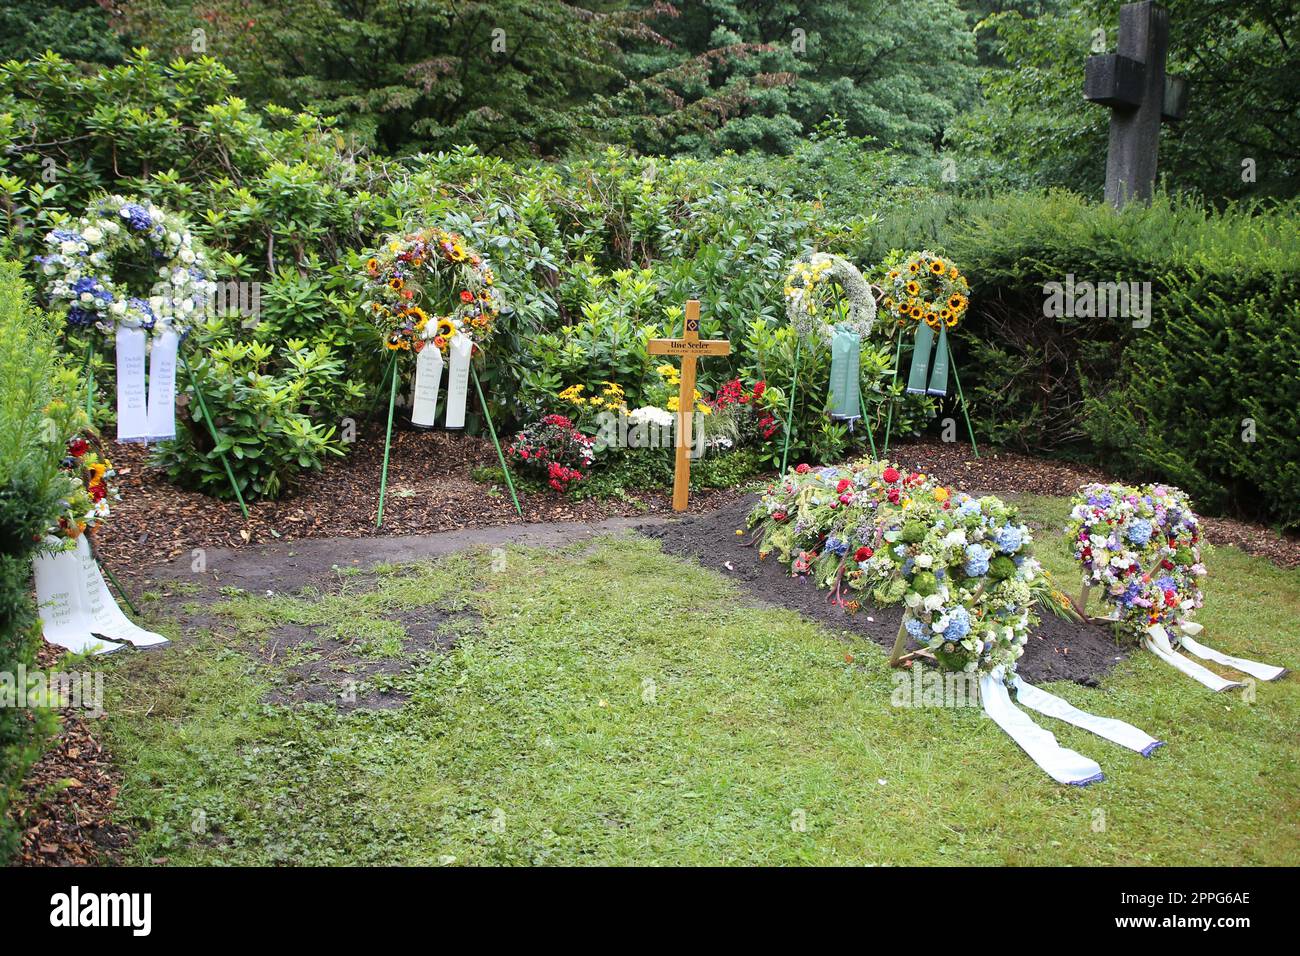 Grave Uwe Seeler, Ohlsdorfer Friedhof Hamburg, 05.08.2022 Stockfoto